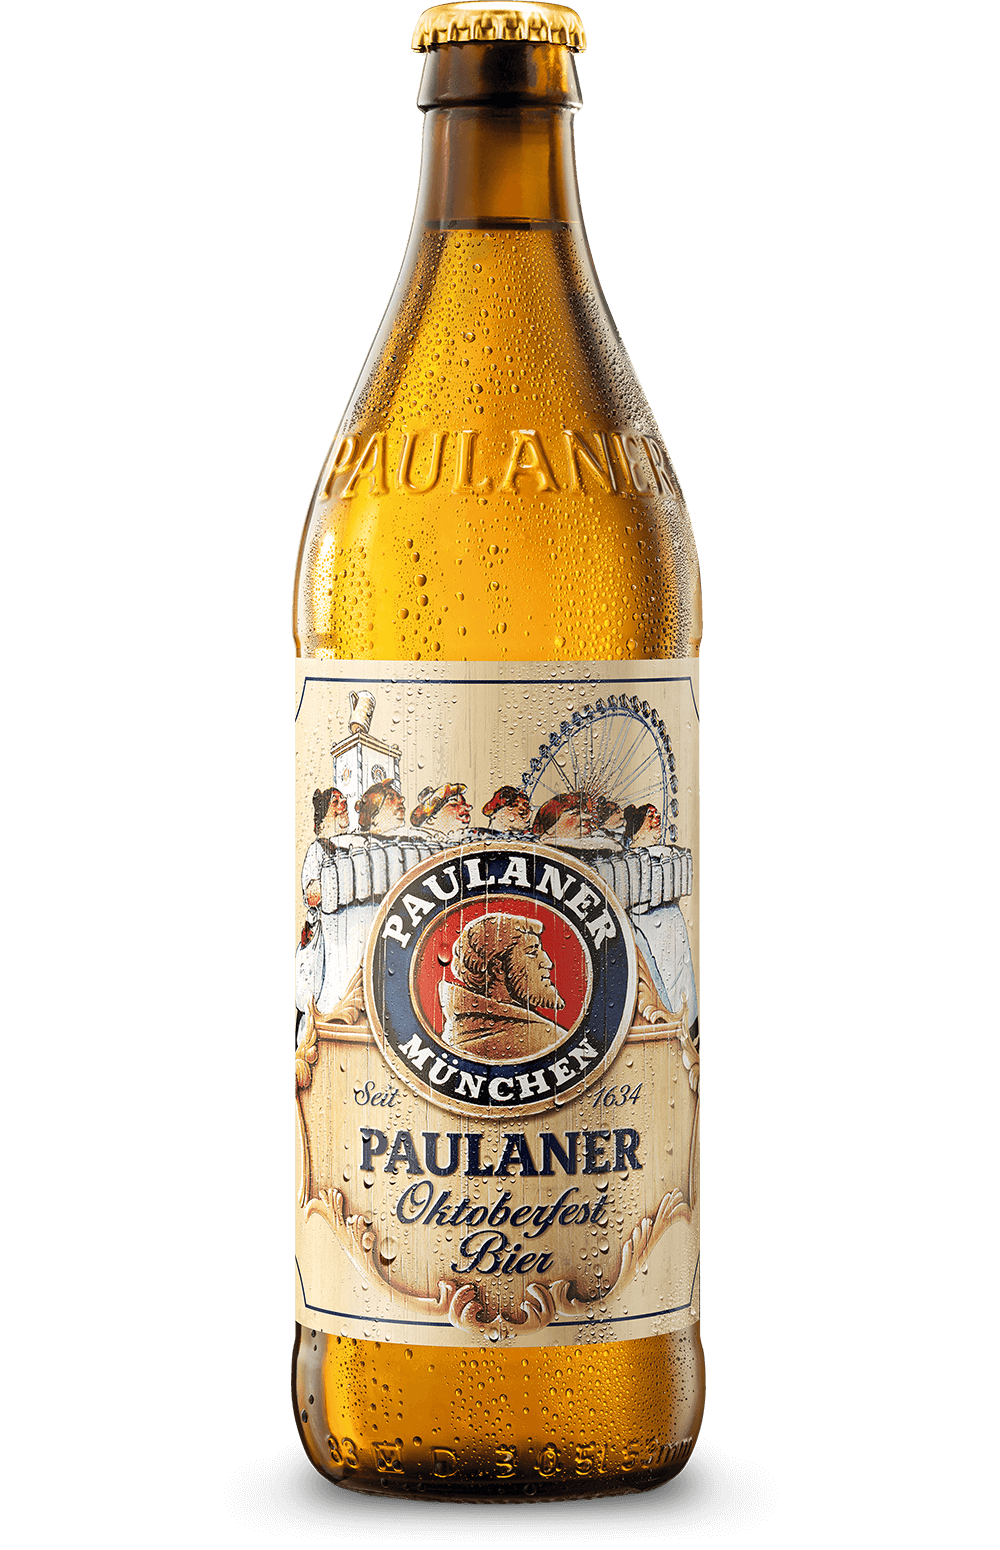 Oktoberfest Bier - Paulaner Munchen - Oktoberfest Bier, 6%, 500ml Bottle